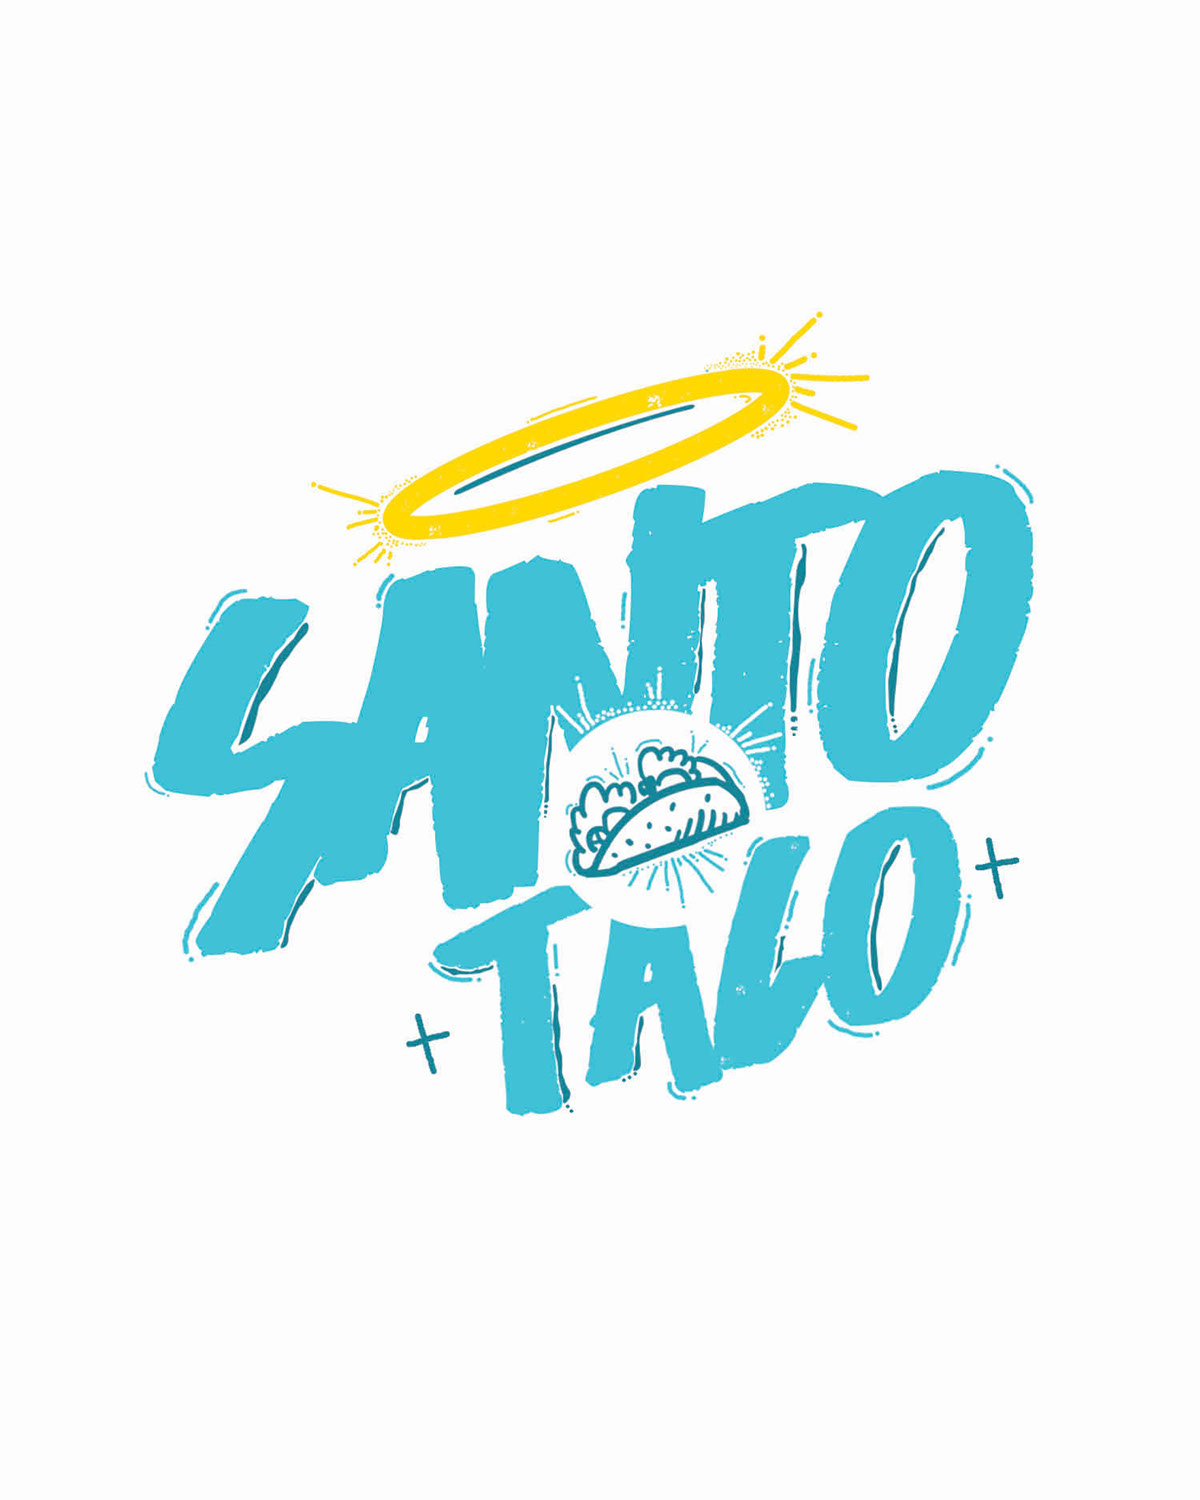 Santo Taco Tacos Food truck Mexican Food texas